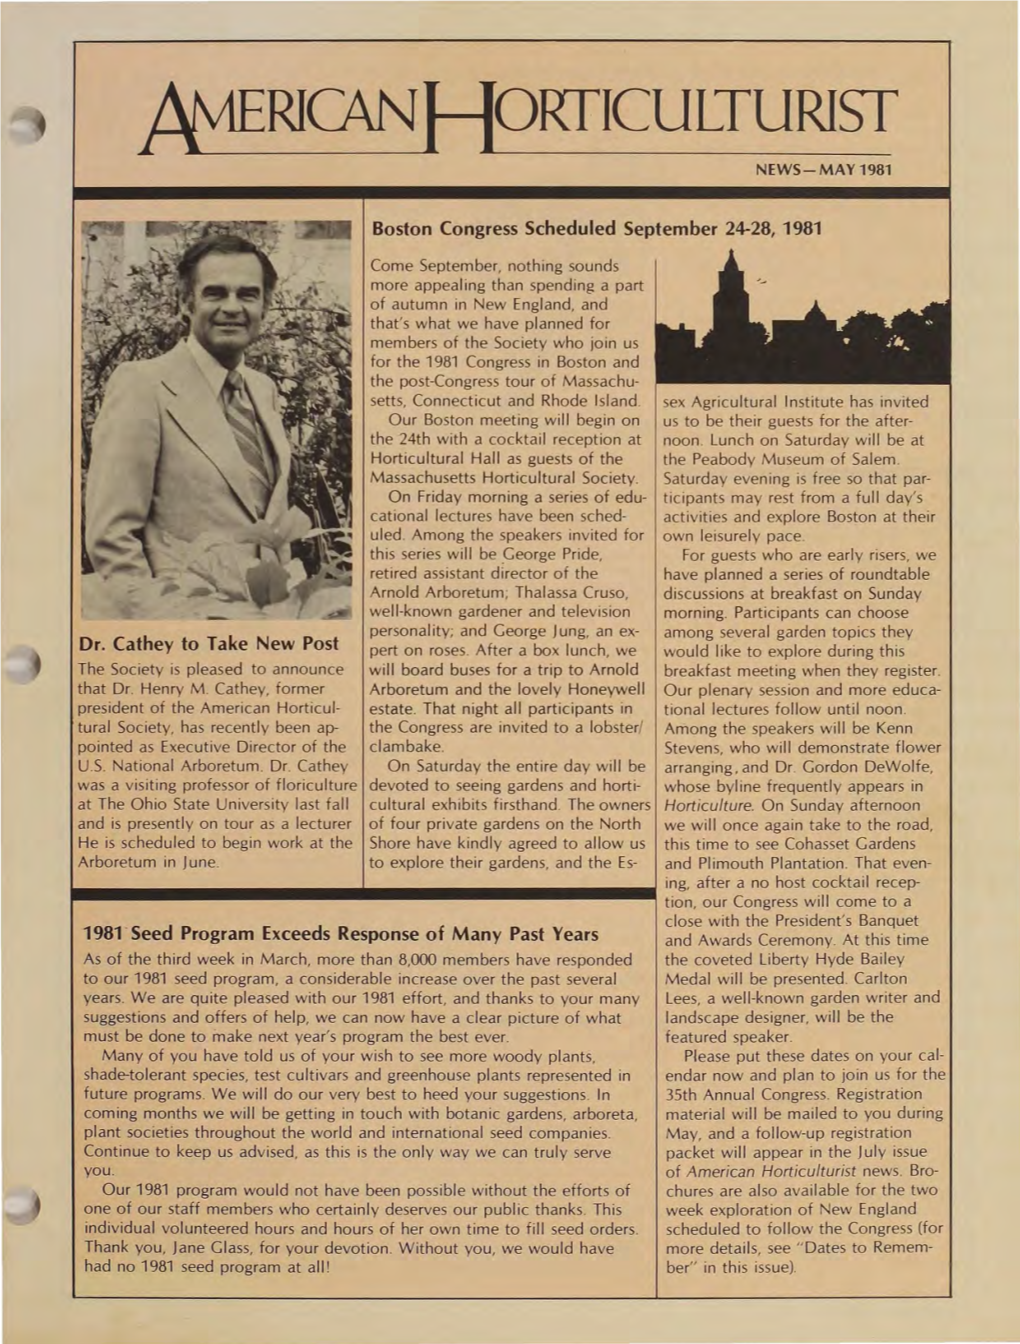 Avtericanj Iorficulturist NEWS-MAY 1981